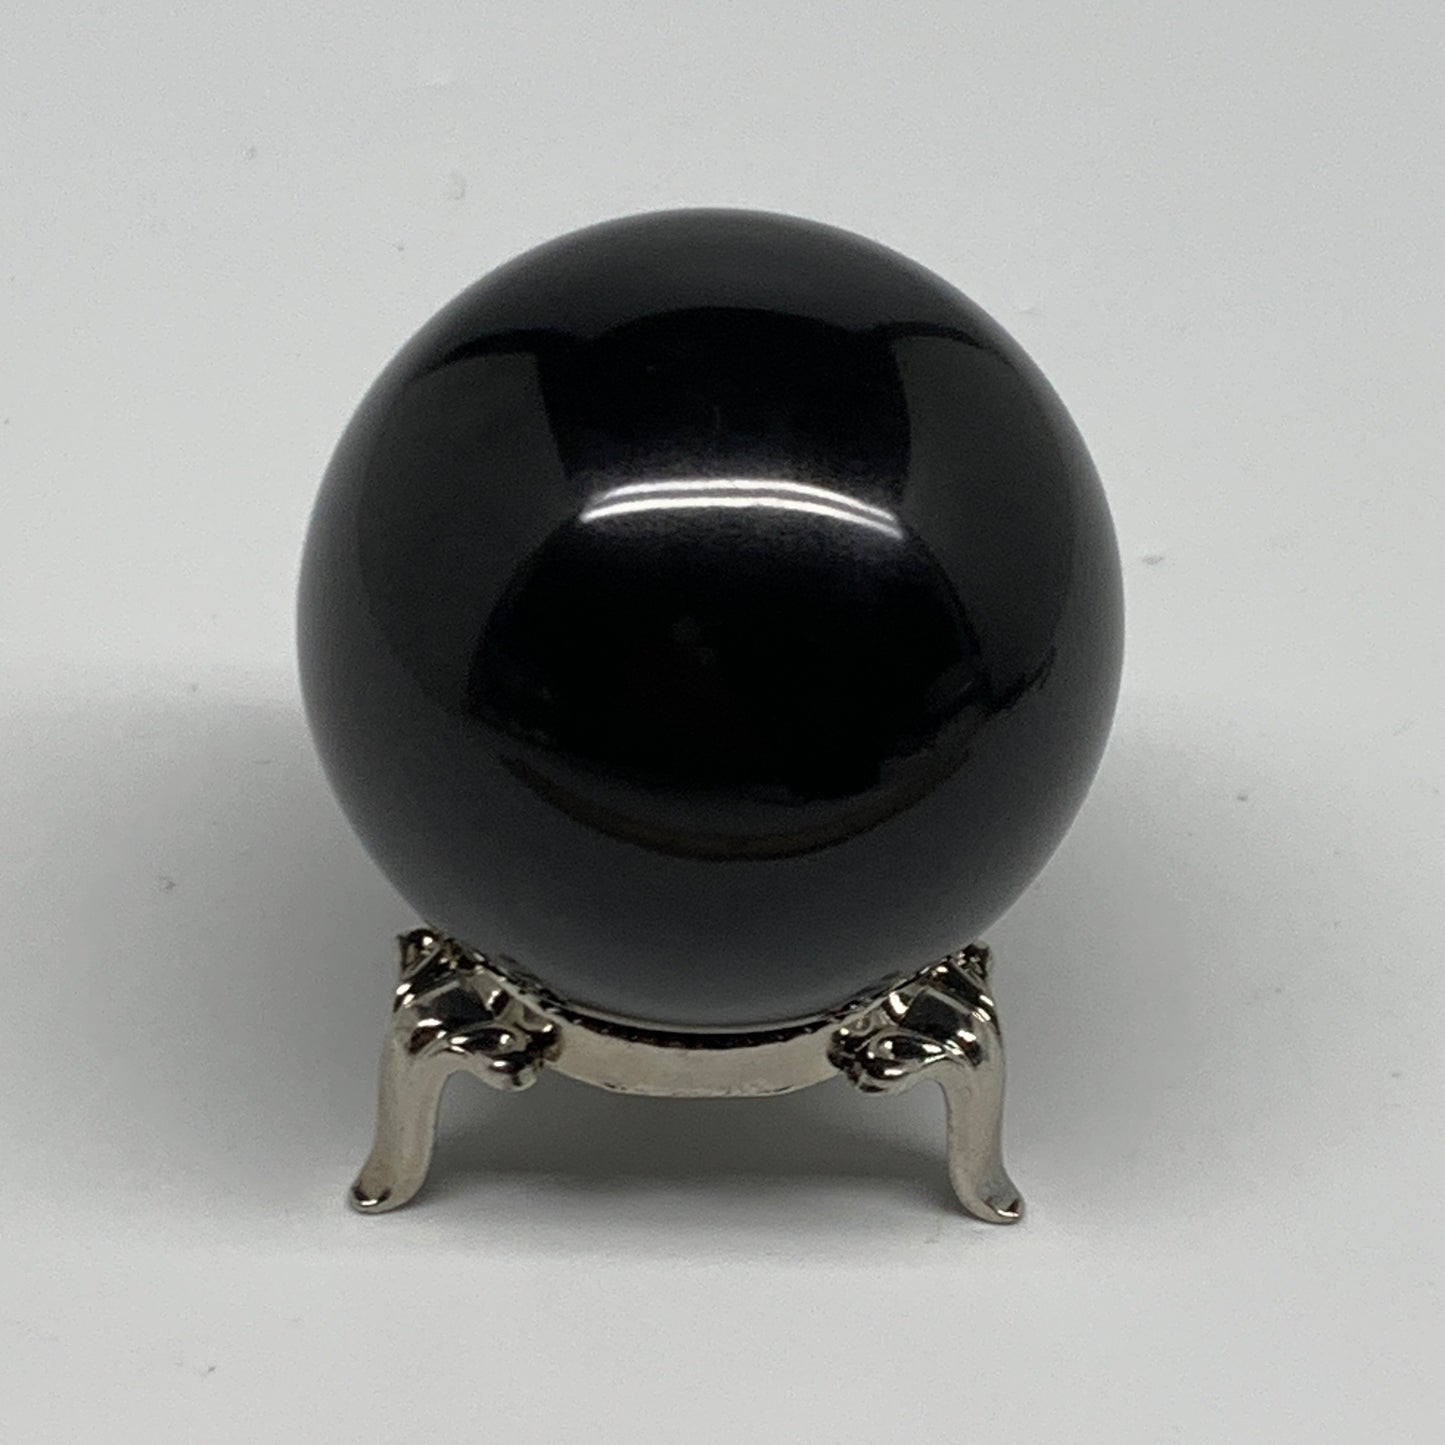 176.8g, 1.9"(48mm), Natural Black Jasper Sphere Ball Gemstone @India, B27913